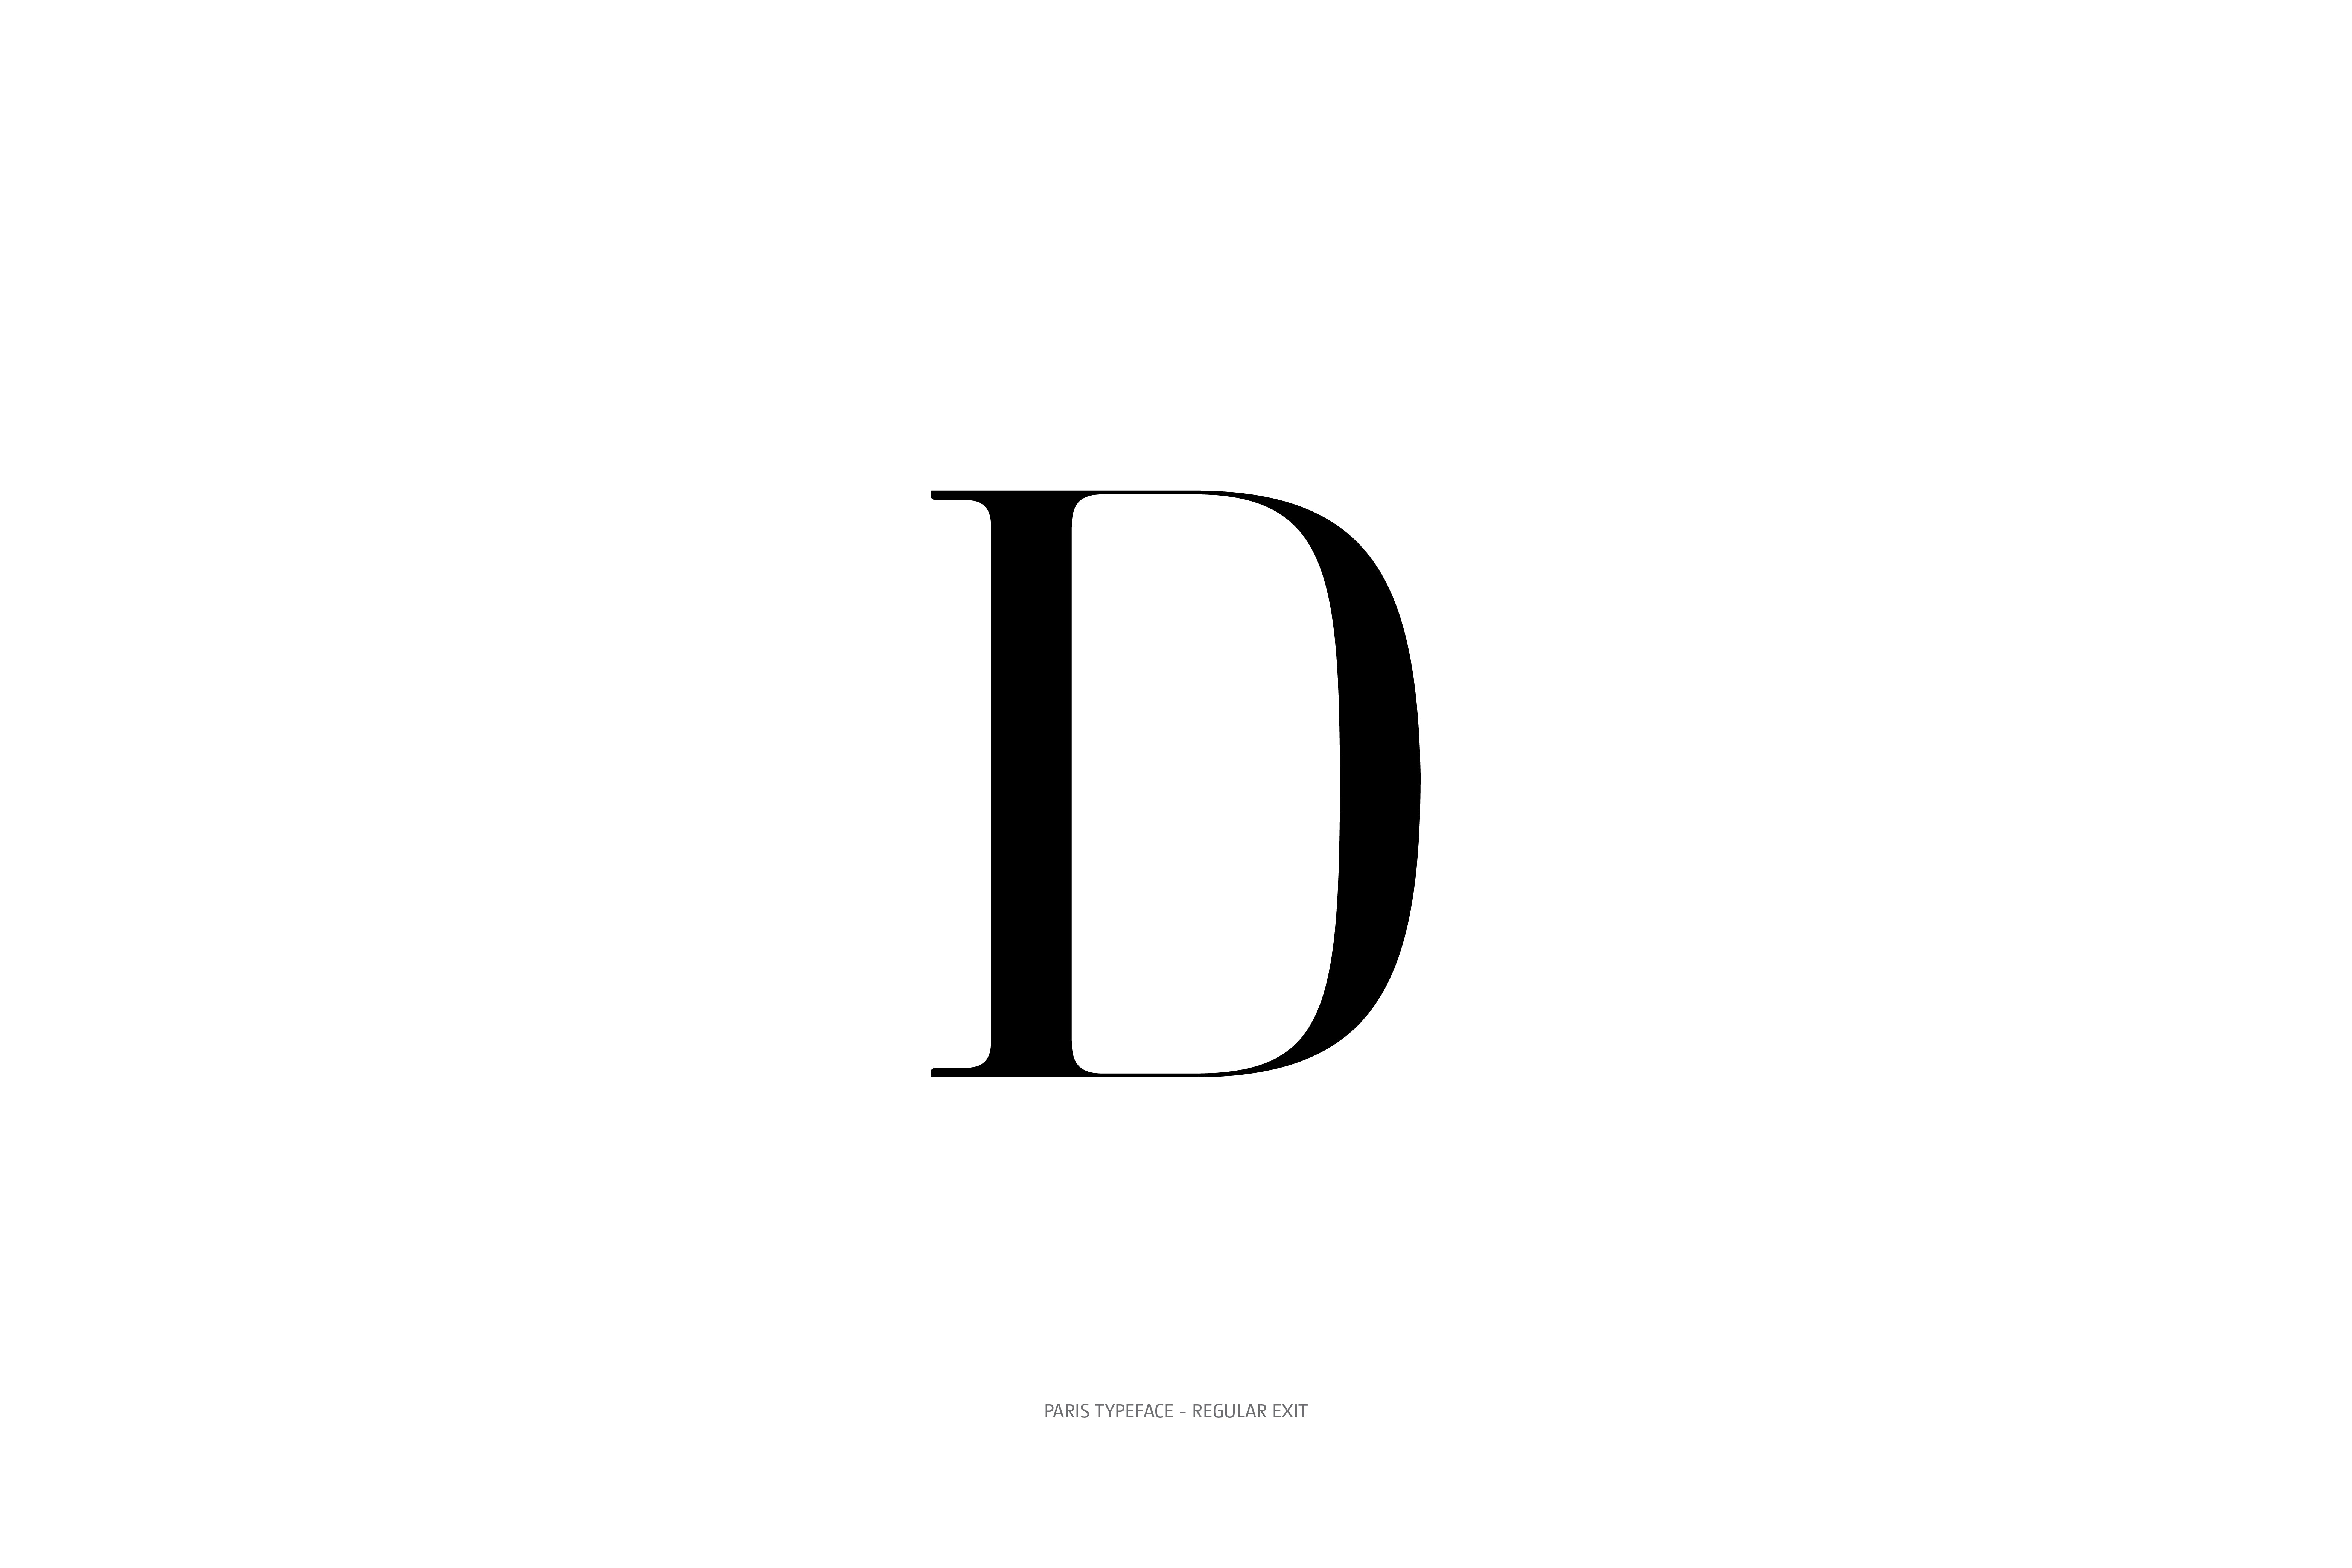 Paris Typeface Regular Exit D